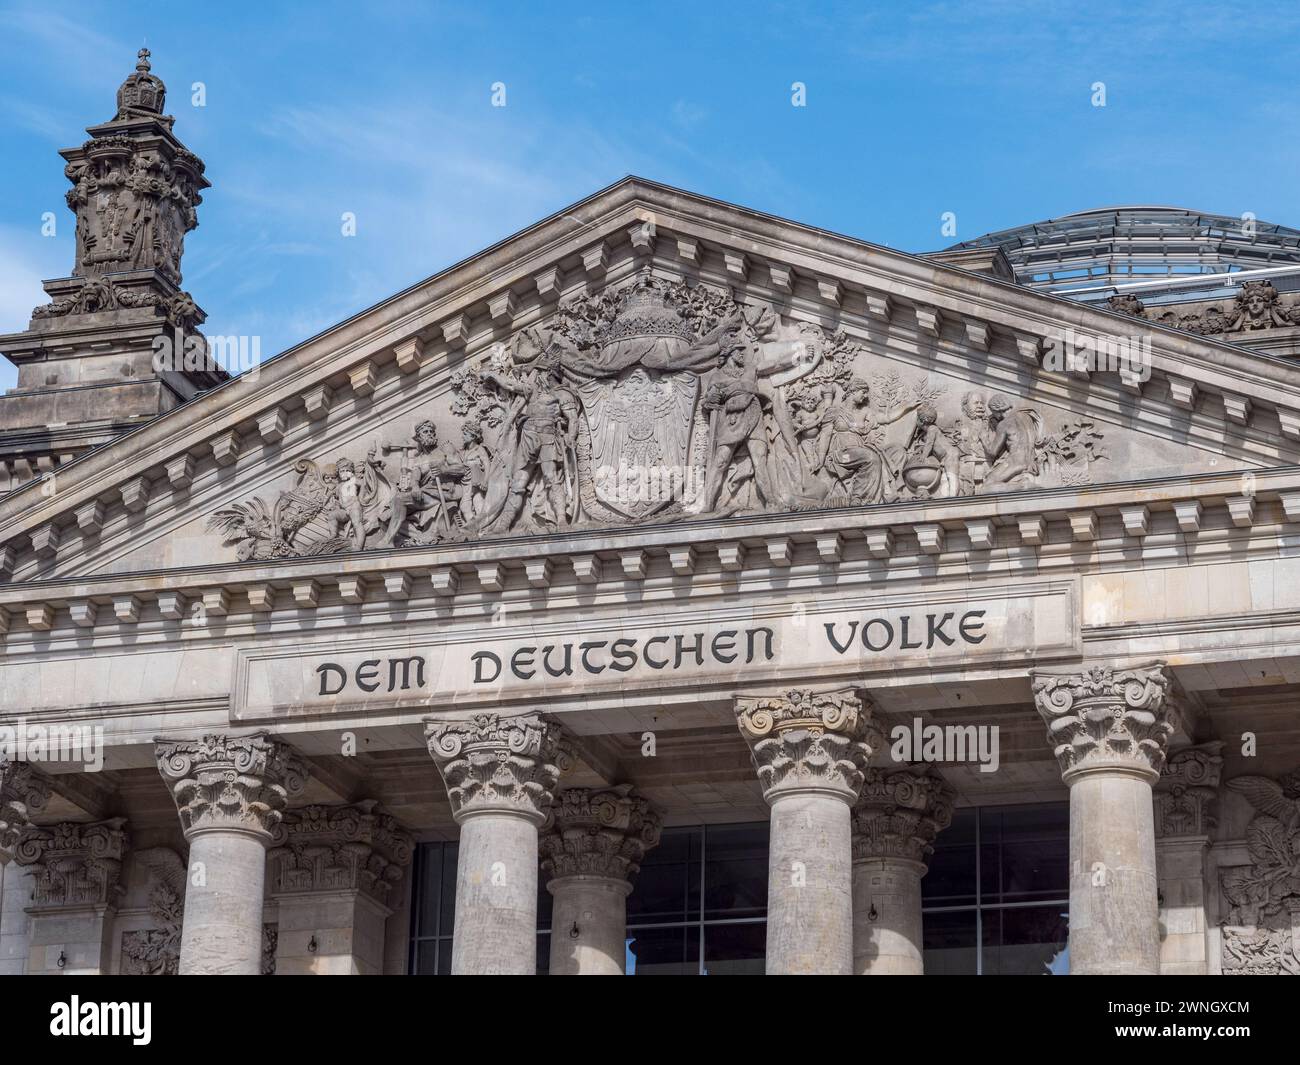 DEM Deutschen Volke sul Reichstag di Berlino, Germania. Foto Stock